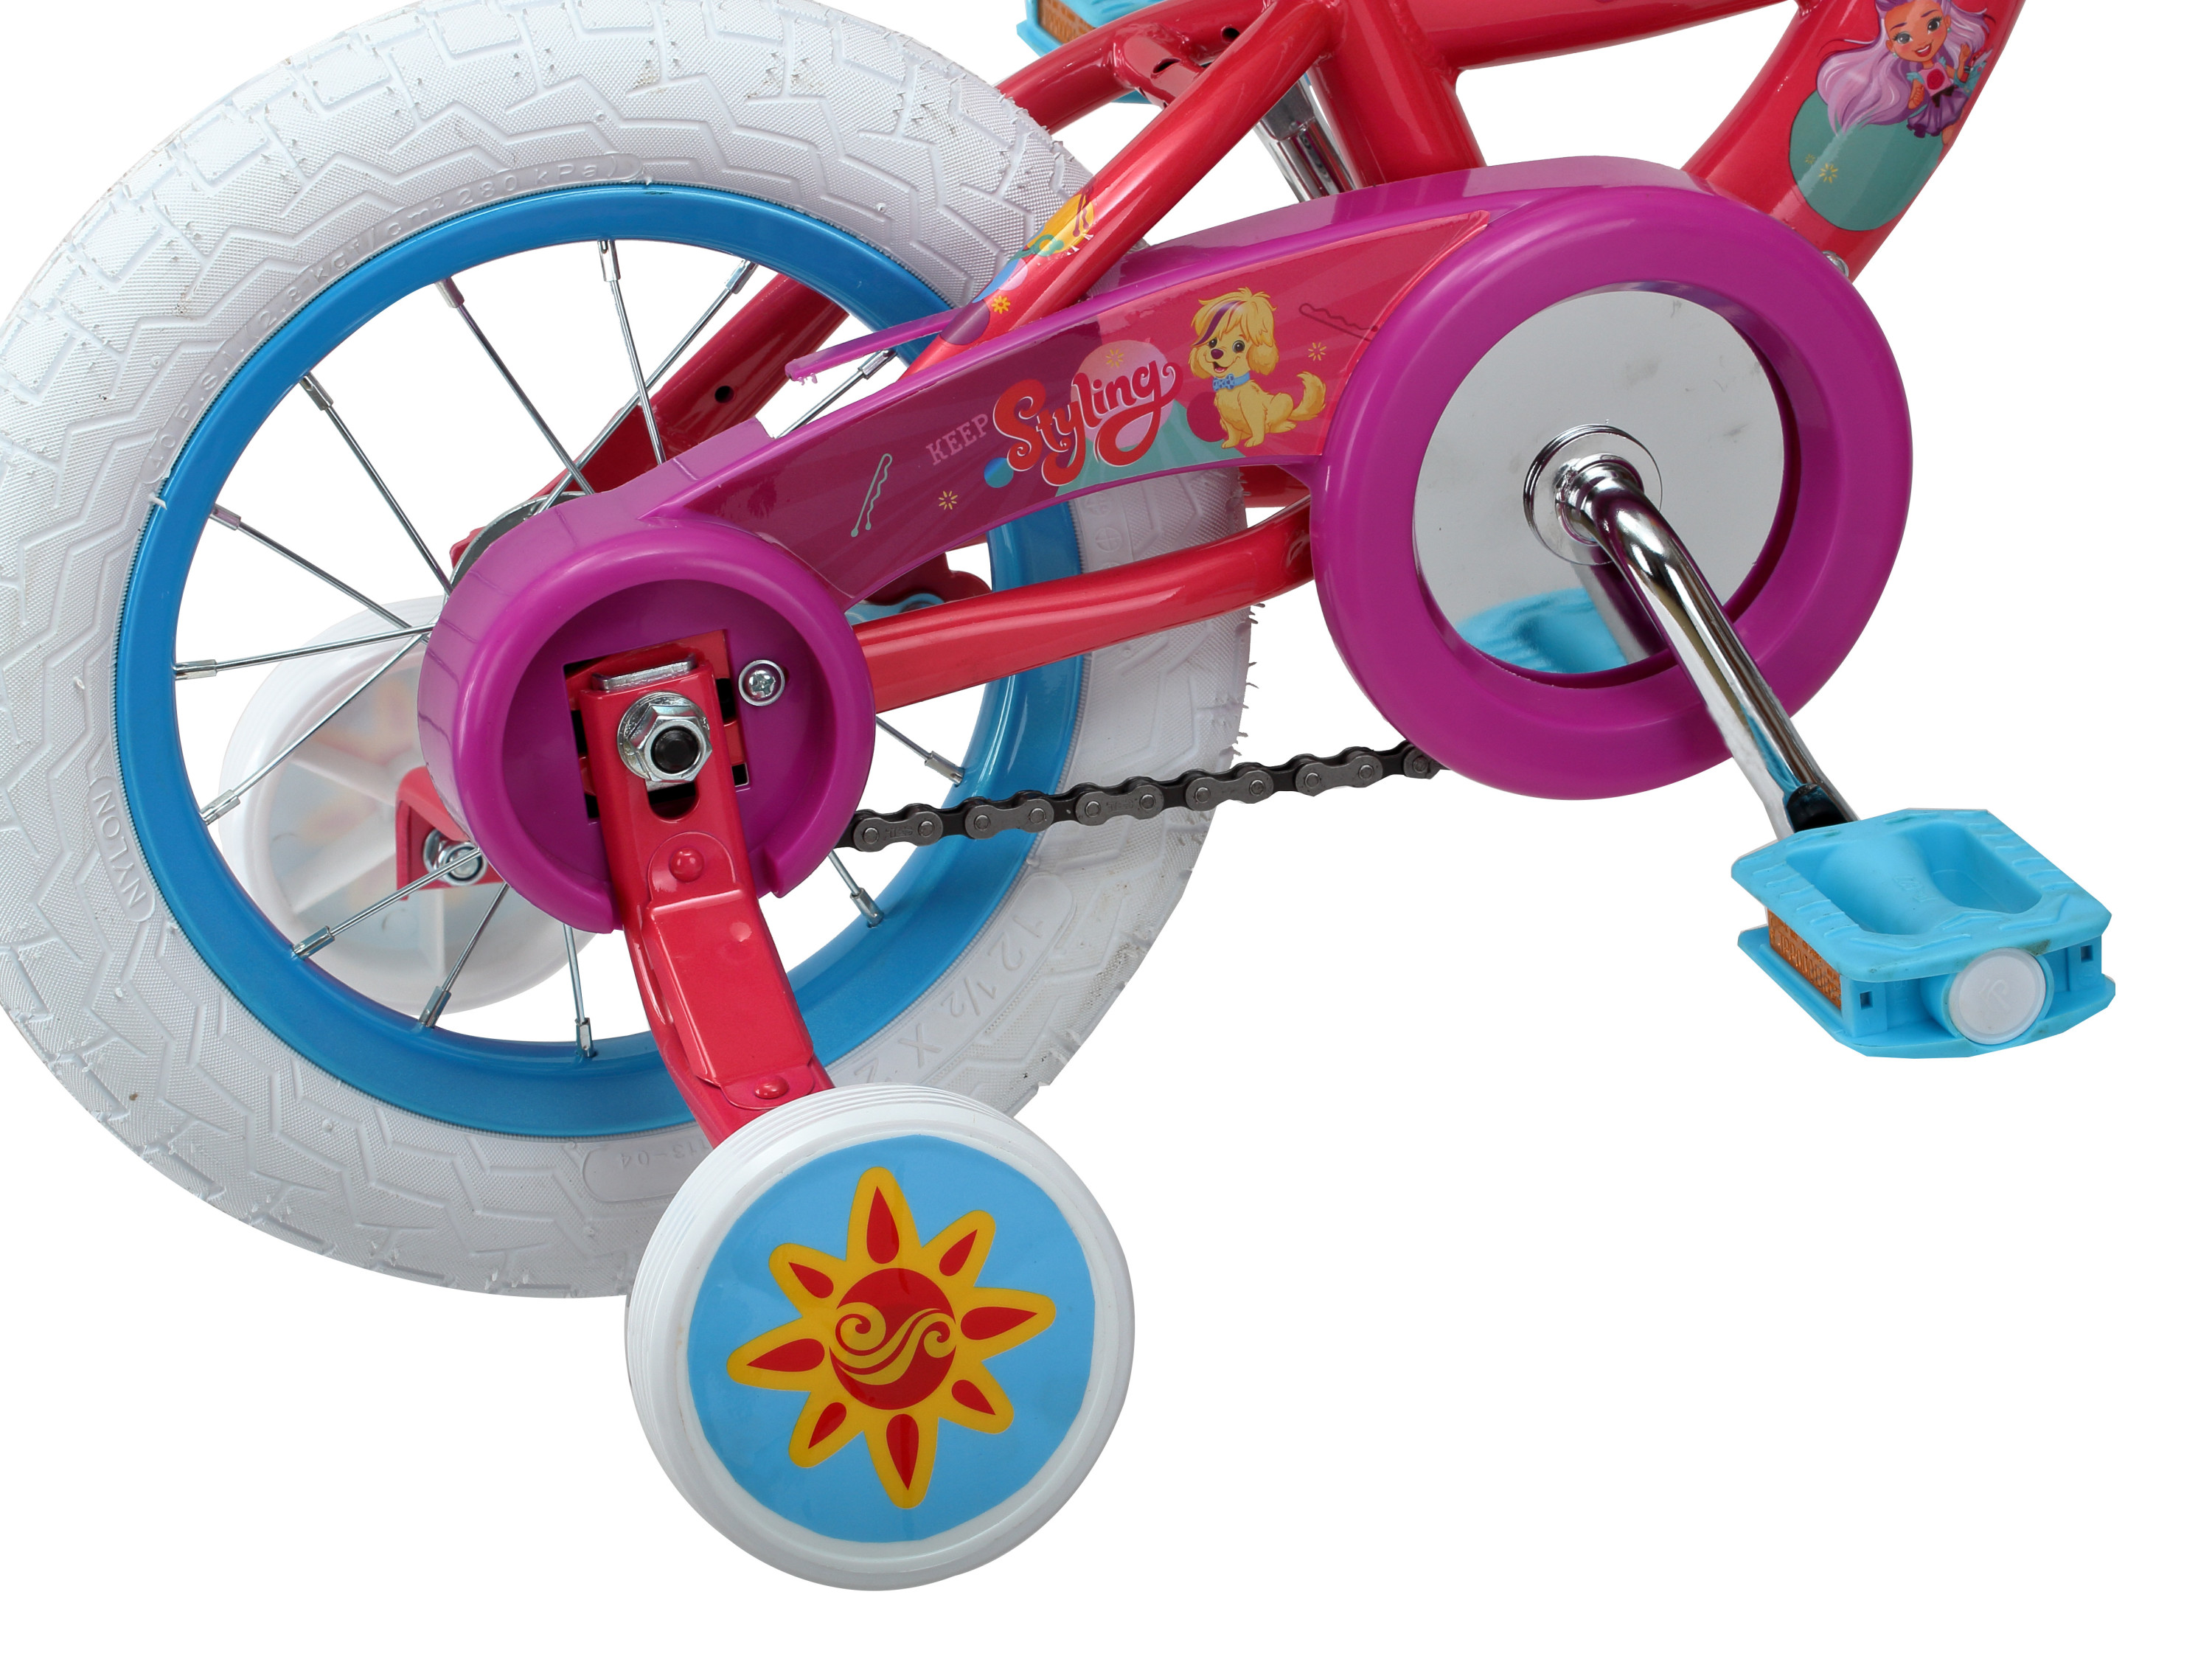 Nickelodeon Sunny Day kids bike, 12-inch wheels, training wheels, Girls, Boys, Pink - image 5 of 5